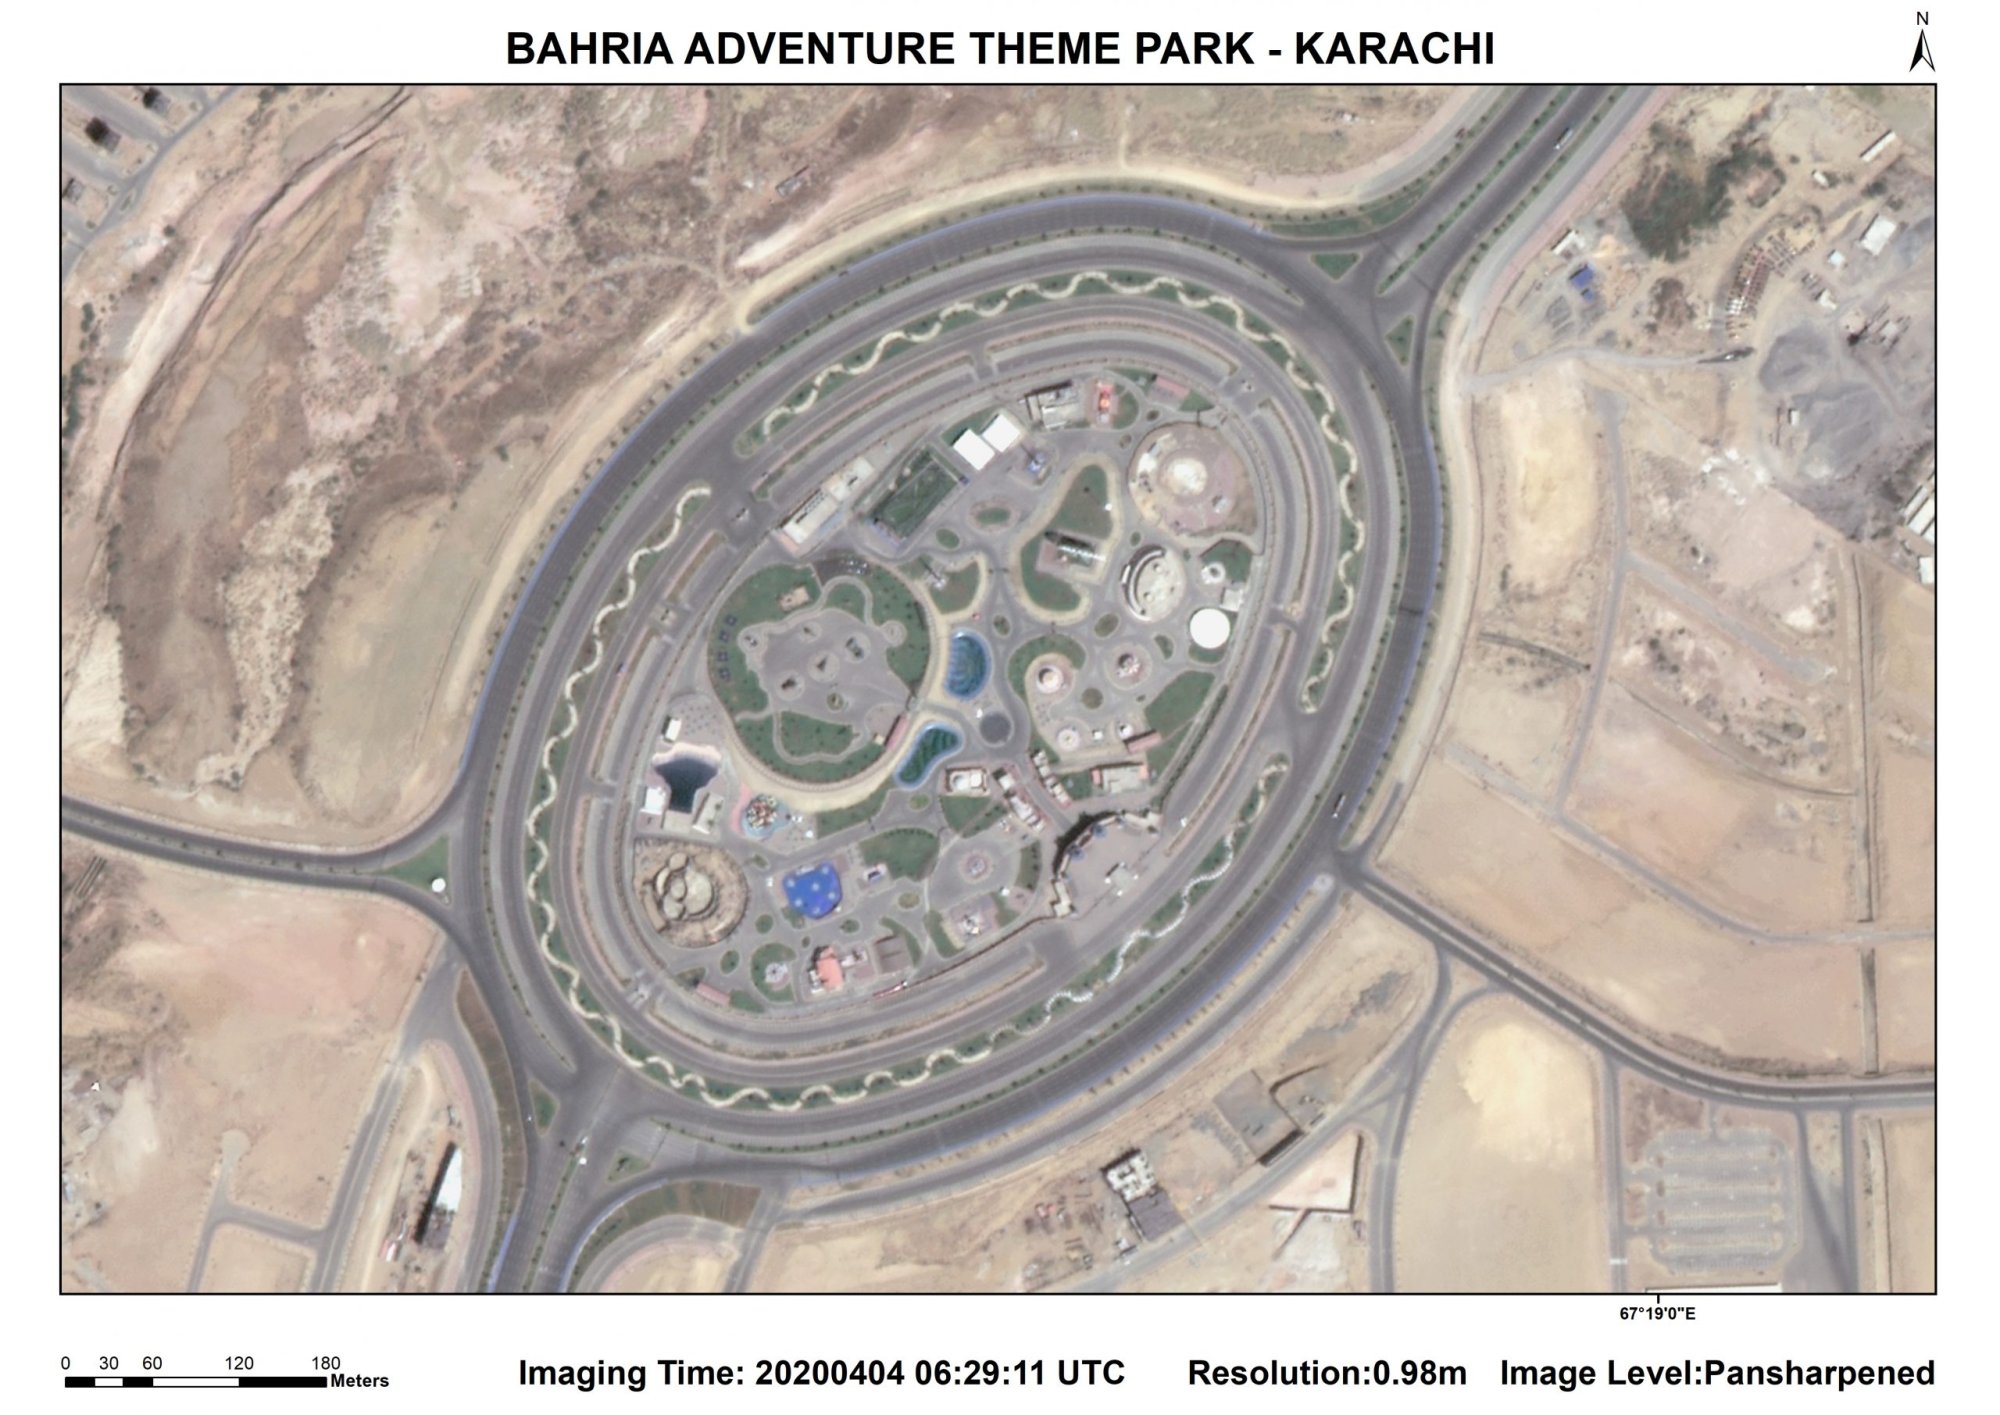 Bahria-adventure-theme-park-Karachi-scaled.jpg